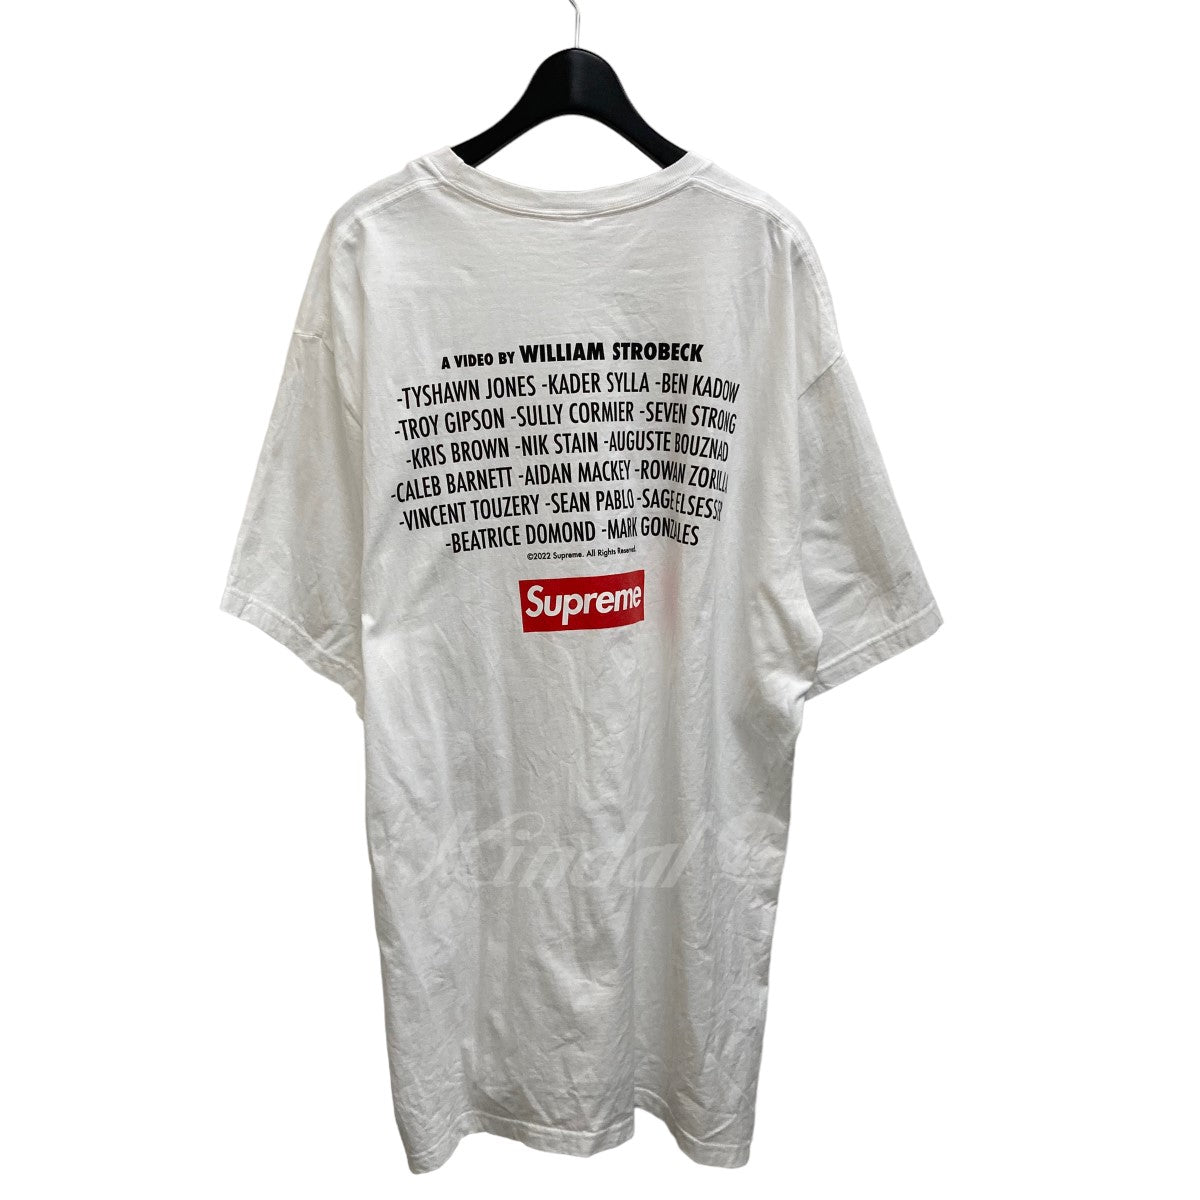 SUPREME(シュプリーム) Play Dead Tee Tシャツ ホワイト サイズ XL 